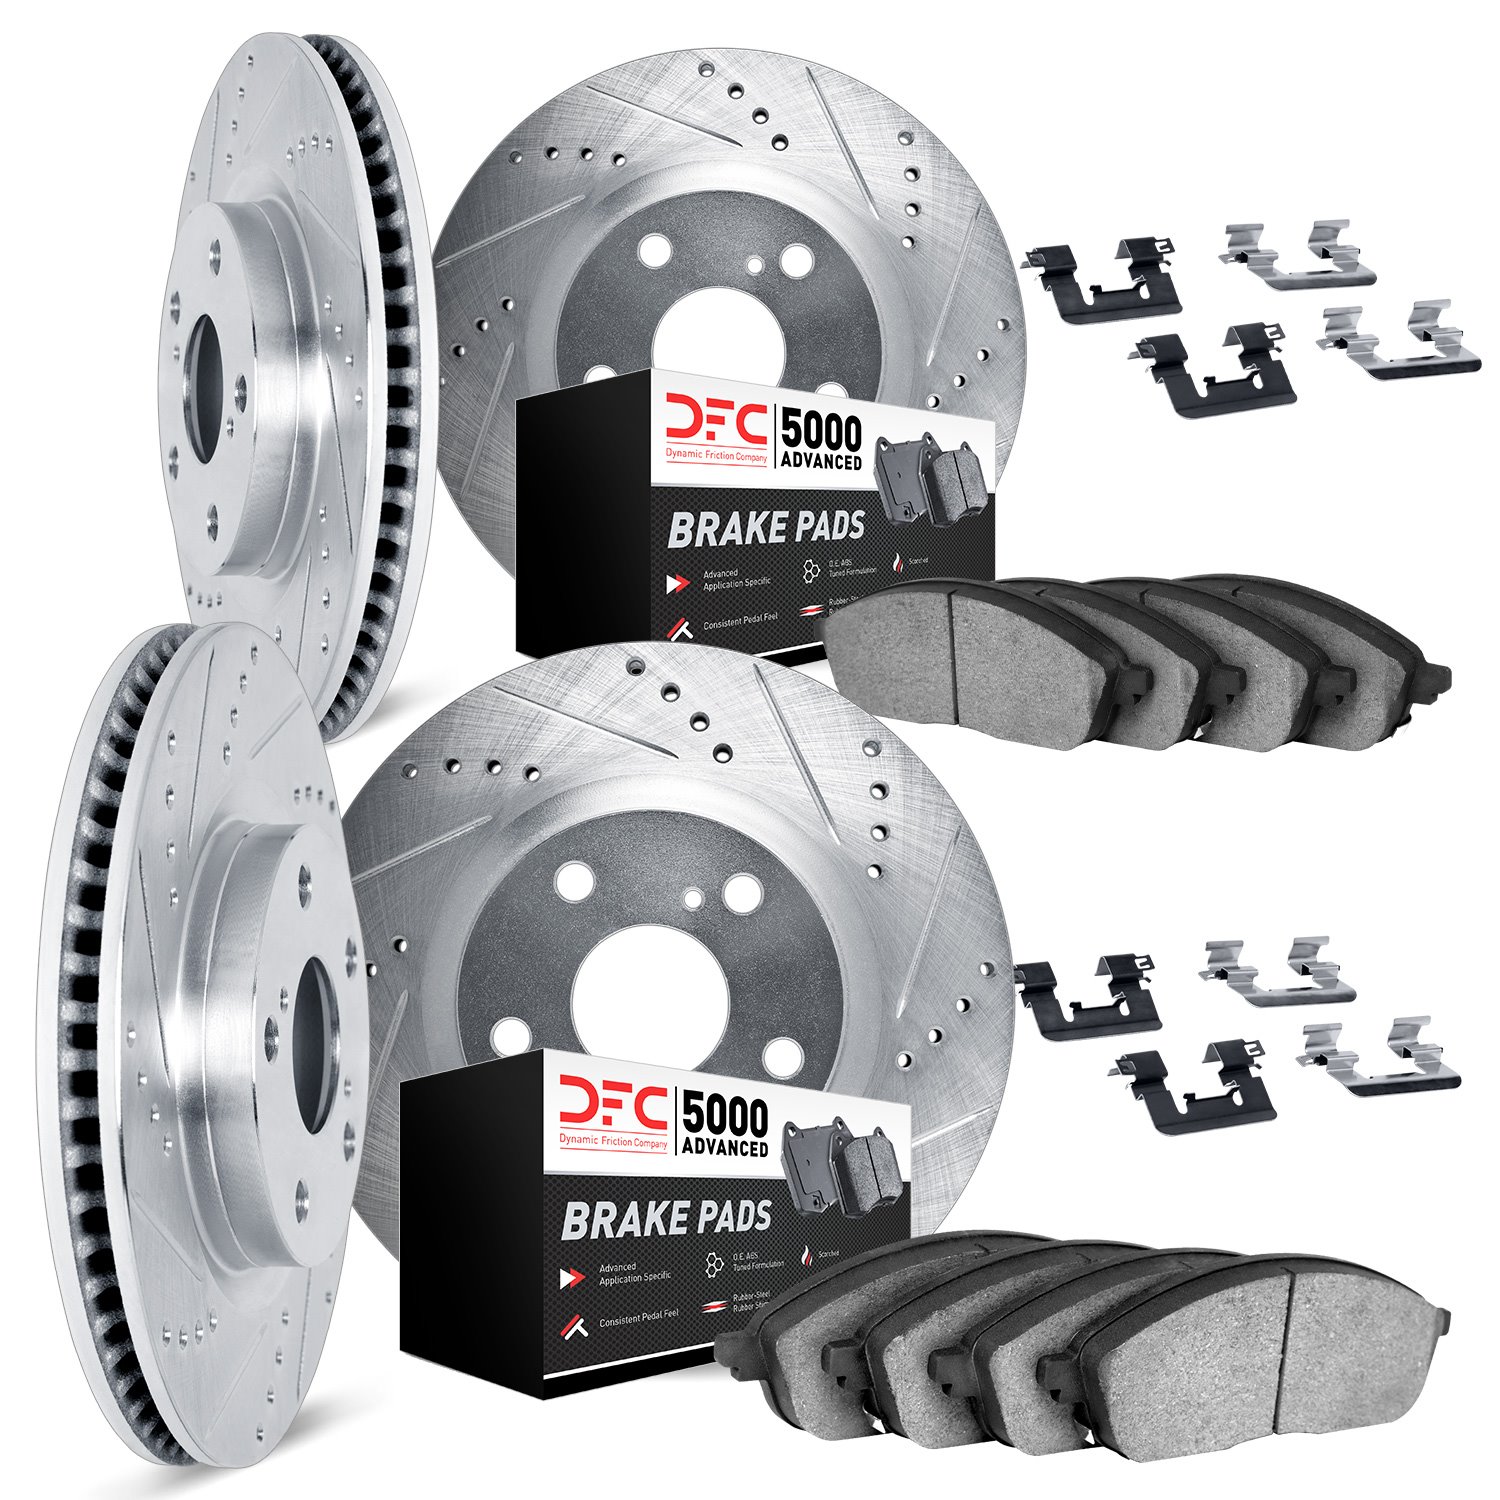 7514-13010 Drilled/Slotted Brake Rotors w/5000 Advanced Brake Pads Kit & Hardware [Silver], 2013-2020 Multiple Makes/Models, Pos